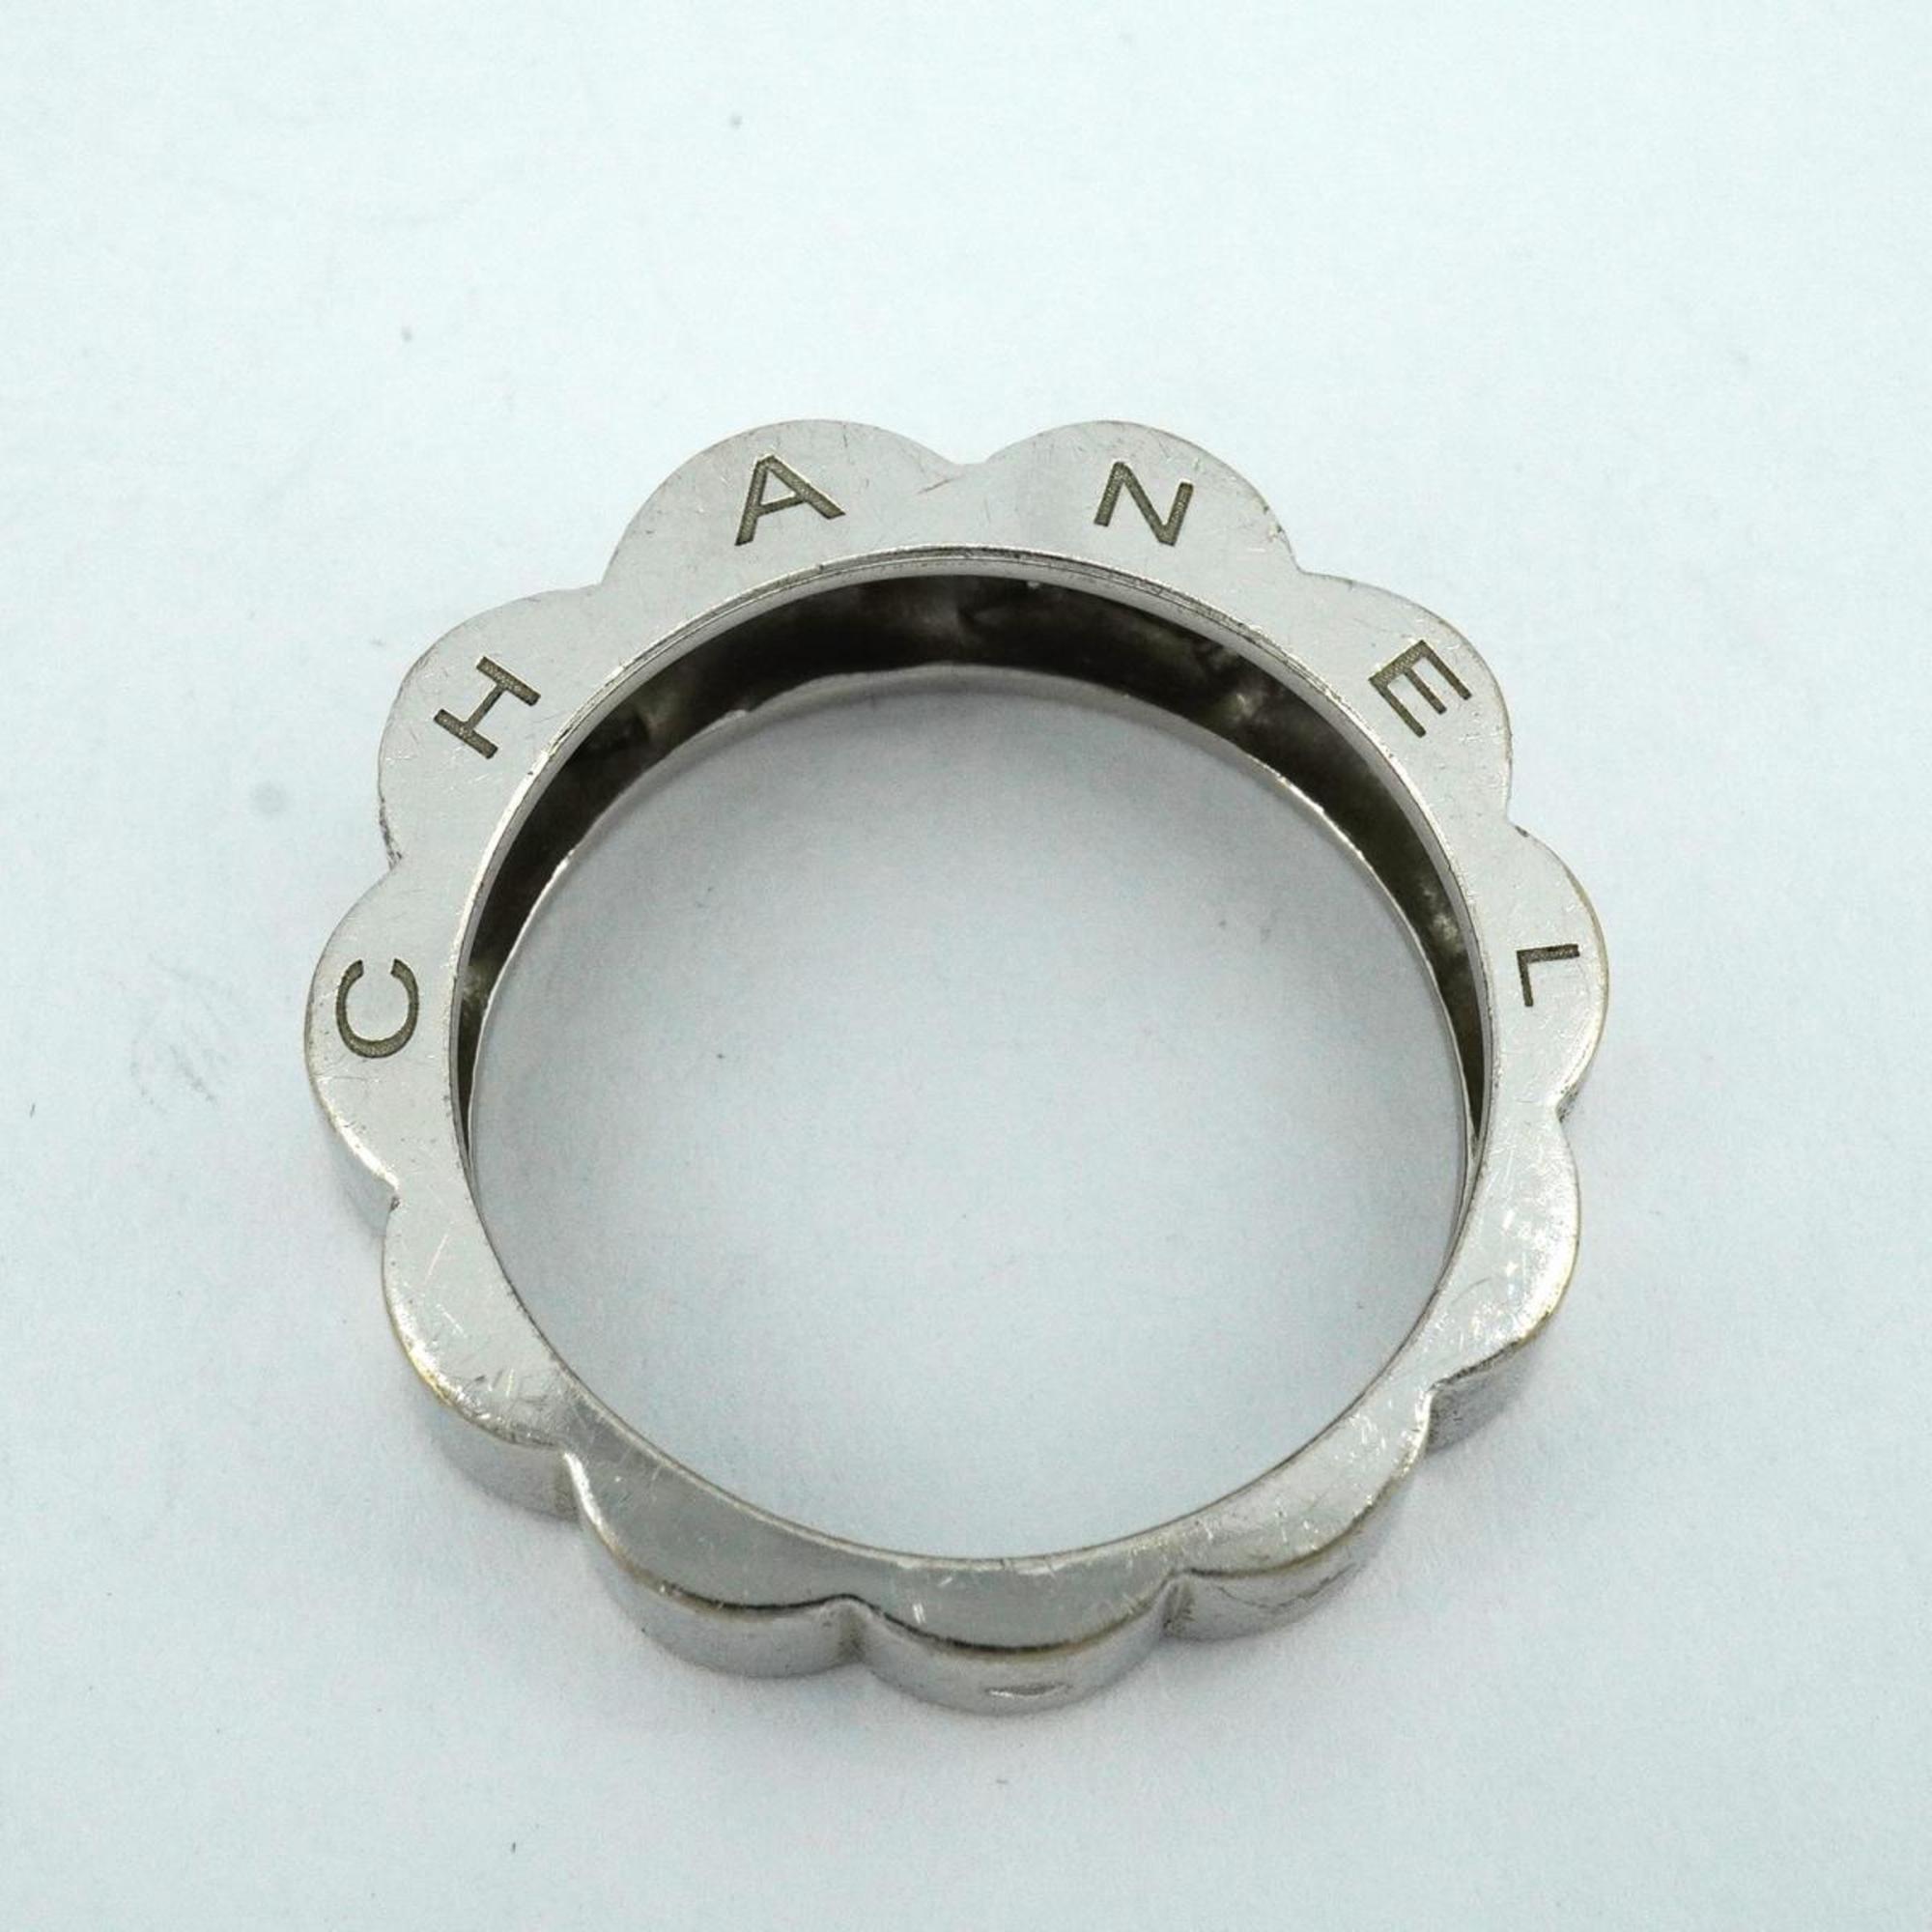 Chanel Ring Camellia Profield Diamond K18WG White Gold Women's